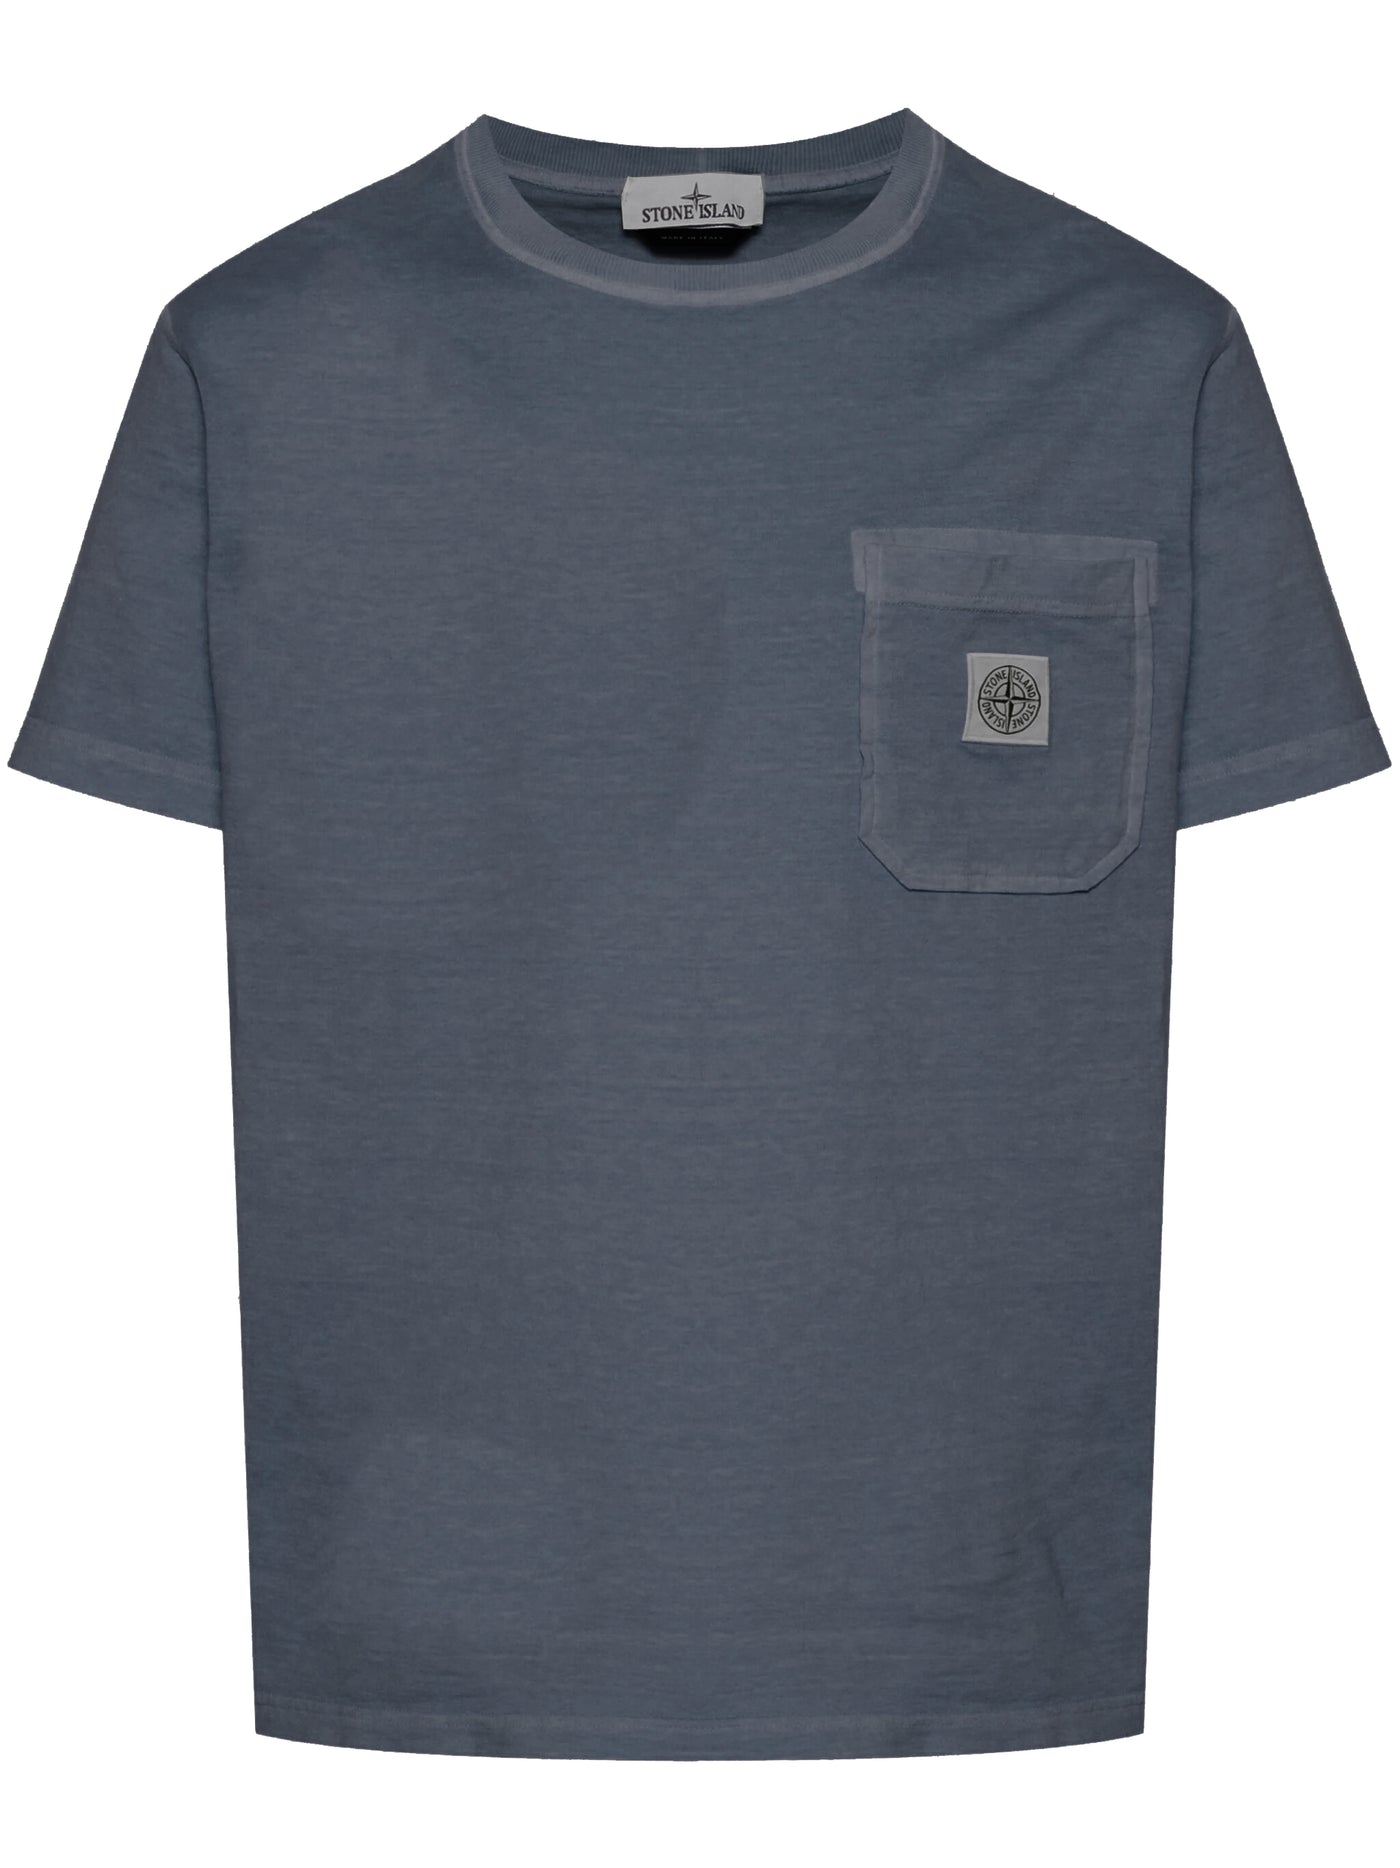 STONE ISLAND - Tee Shirt délavé à poche bleu